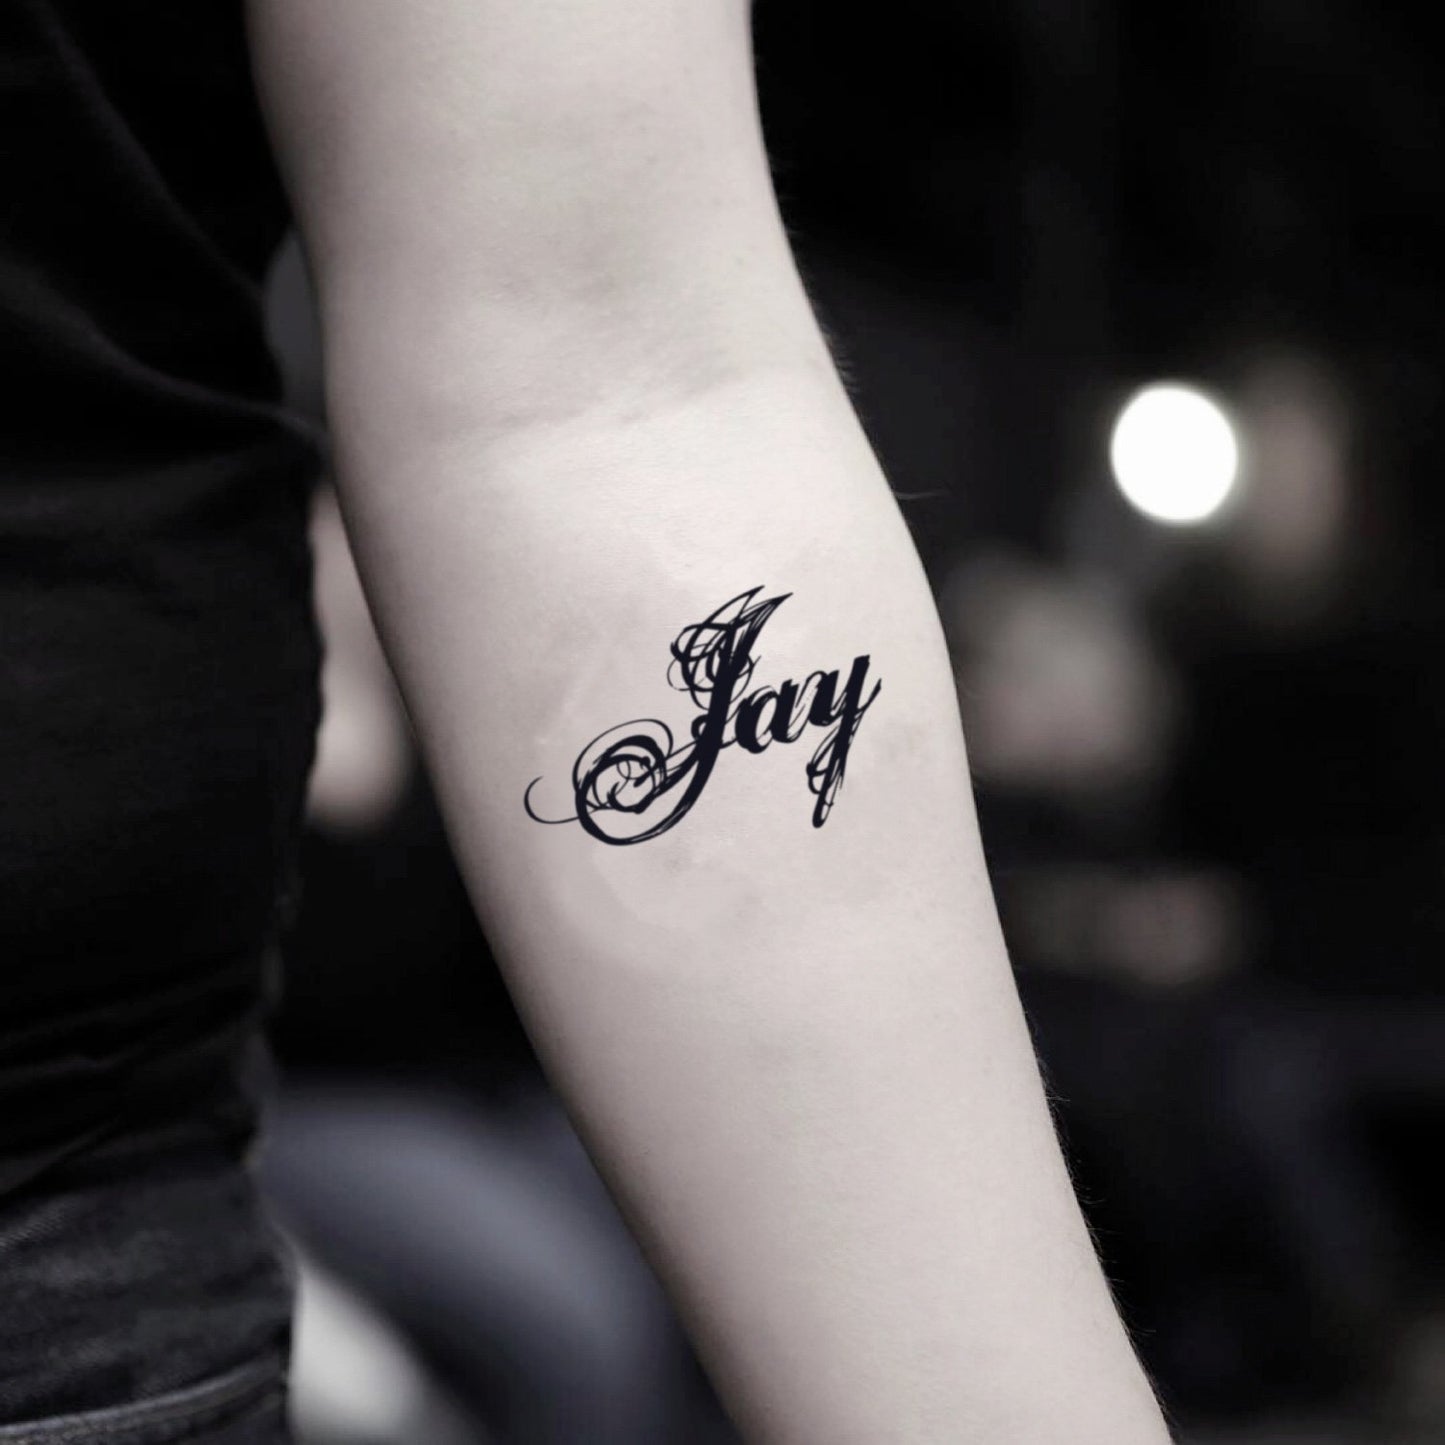 fake small jay lettering temporary tattoo sticker design idea on inner arm